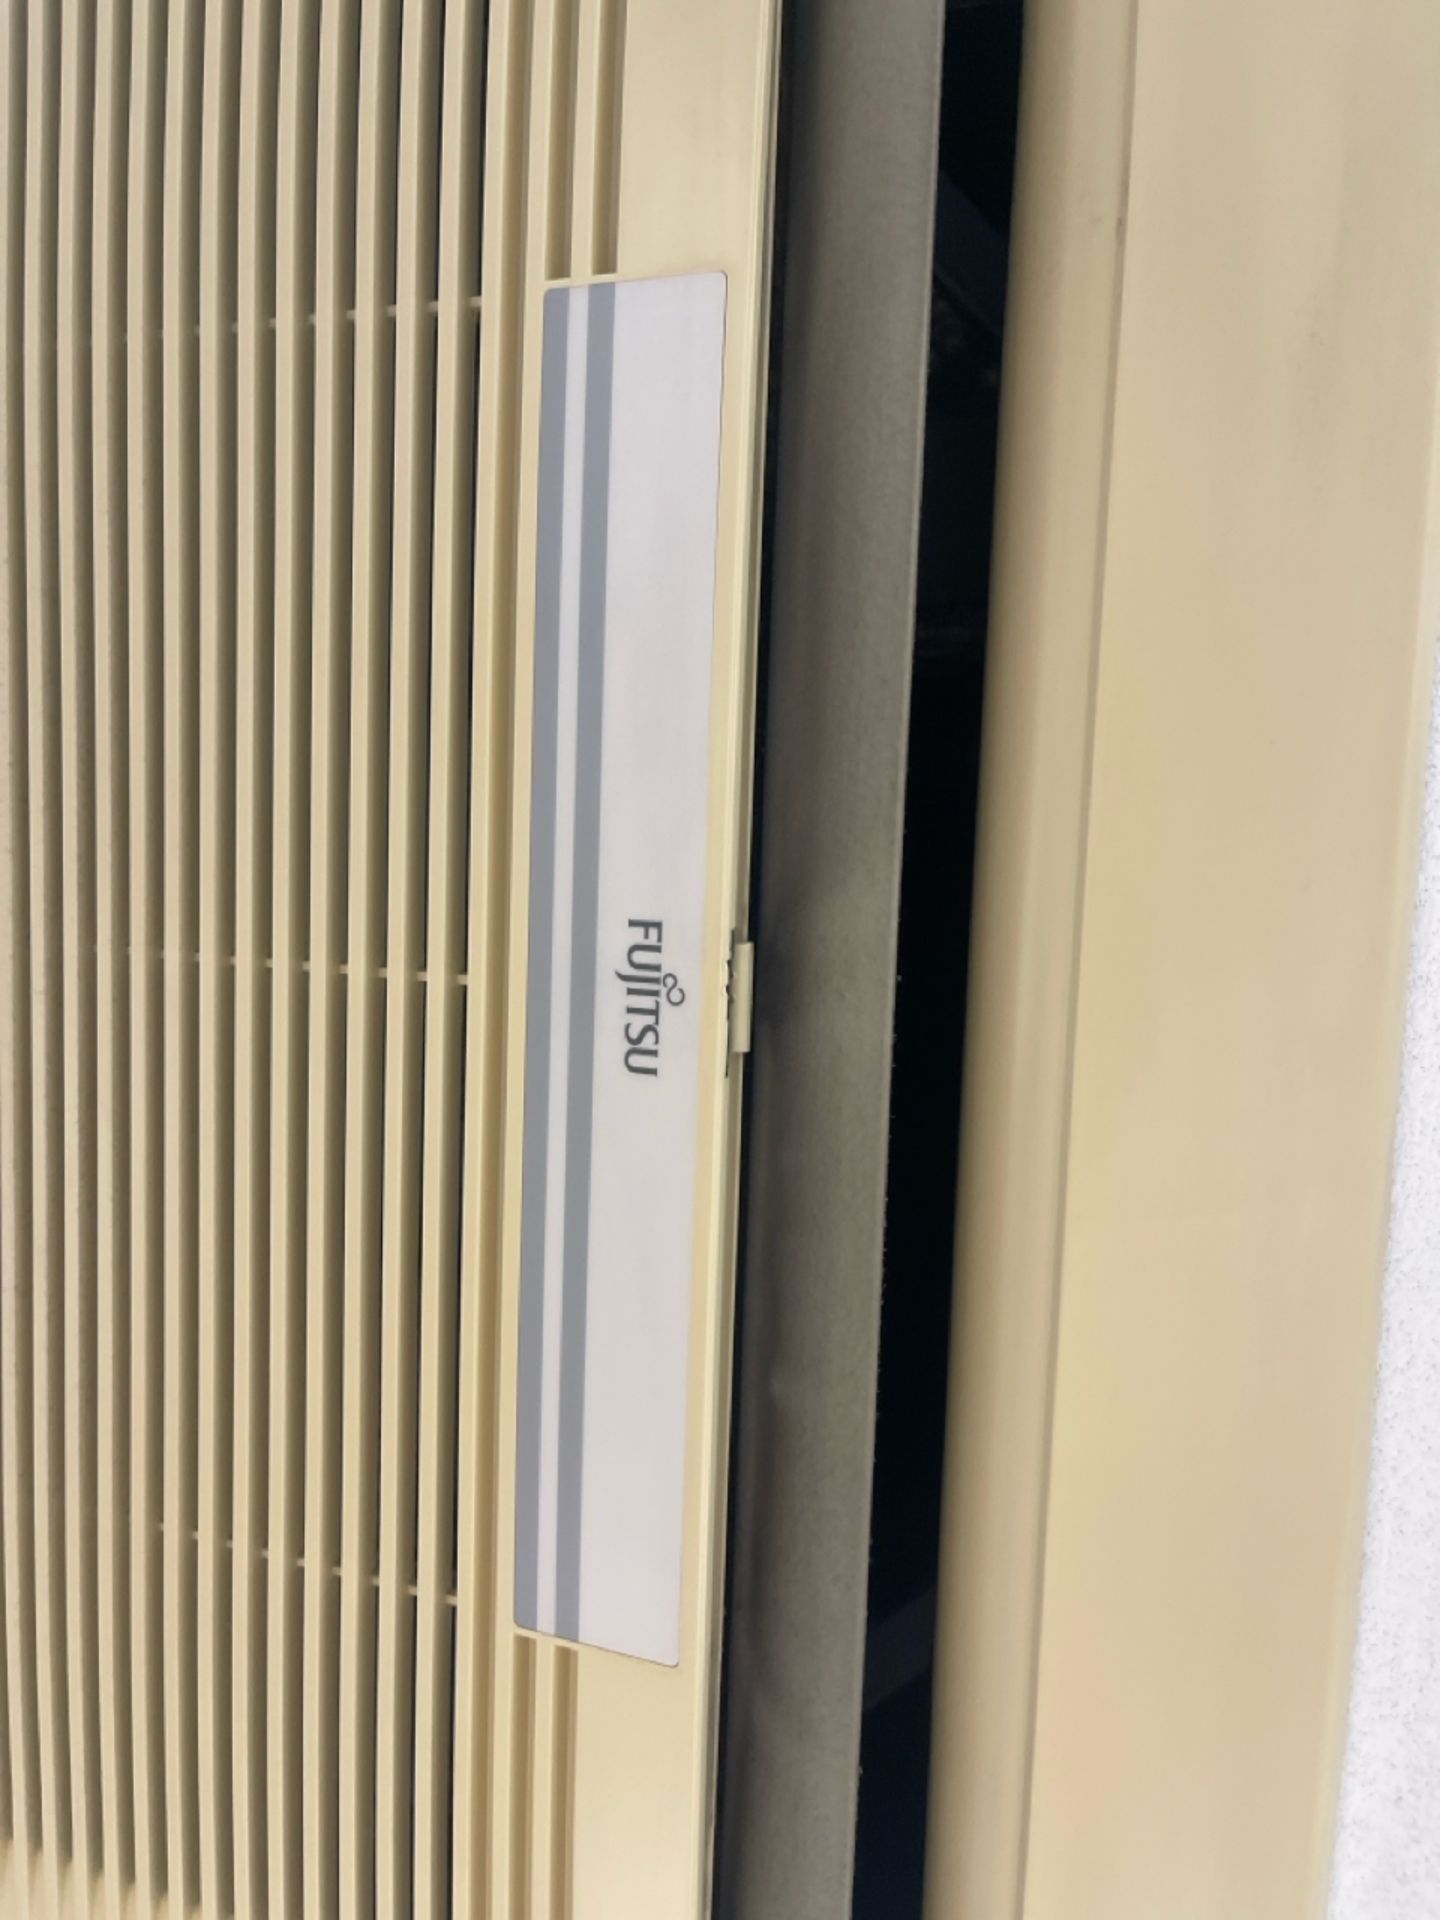 Fujitsu Ceiling Casette - Image 2 of 2